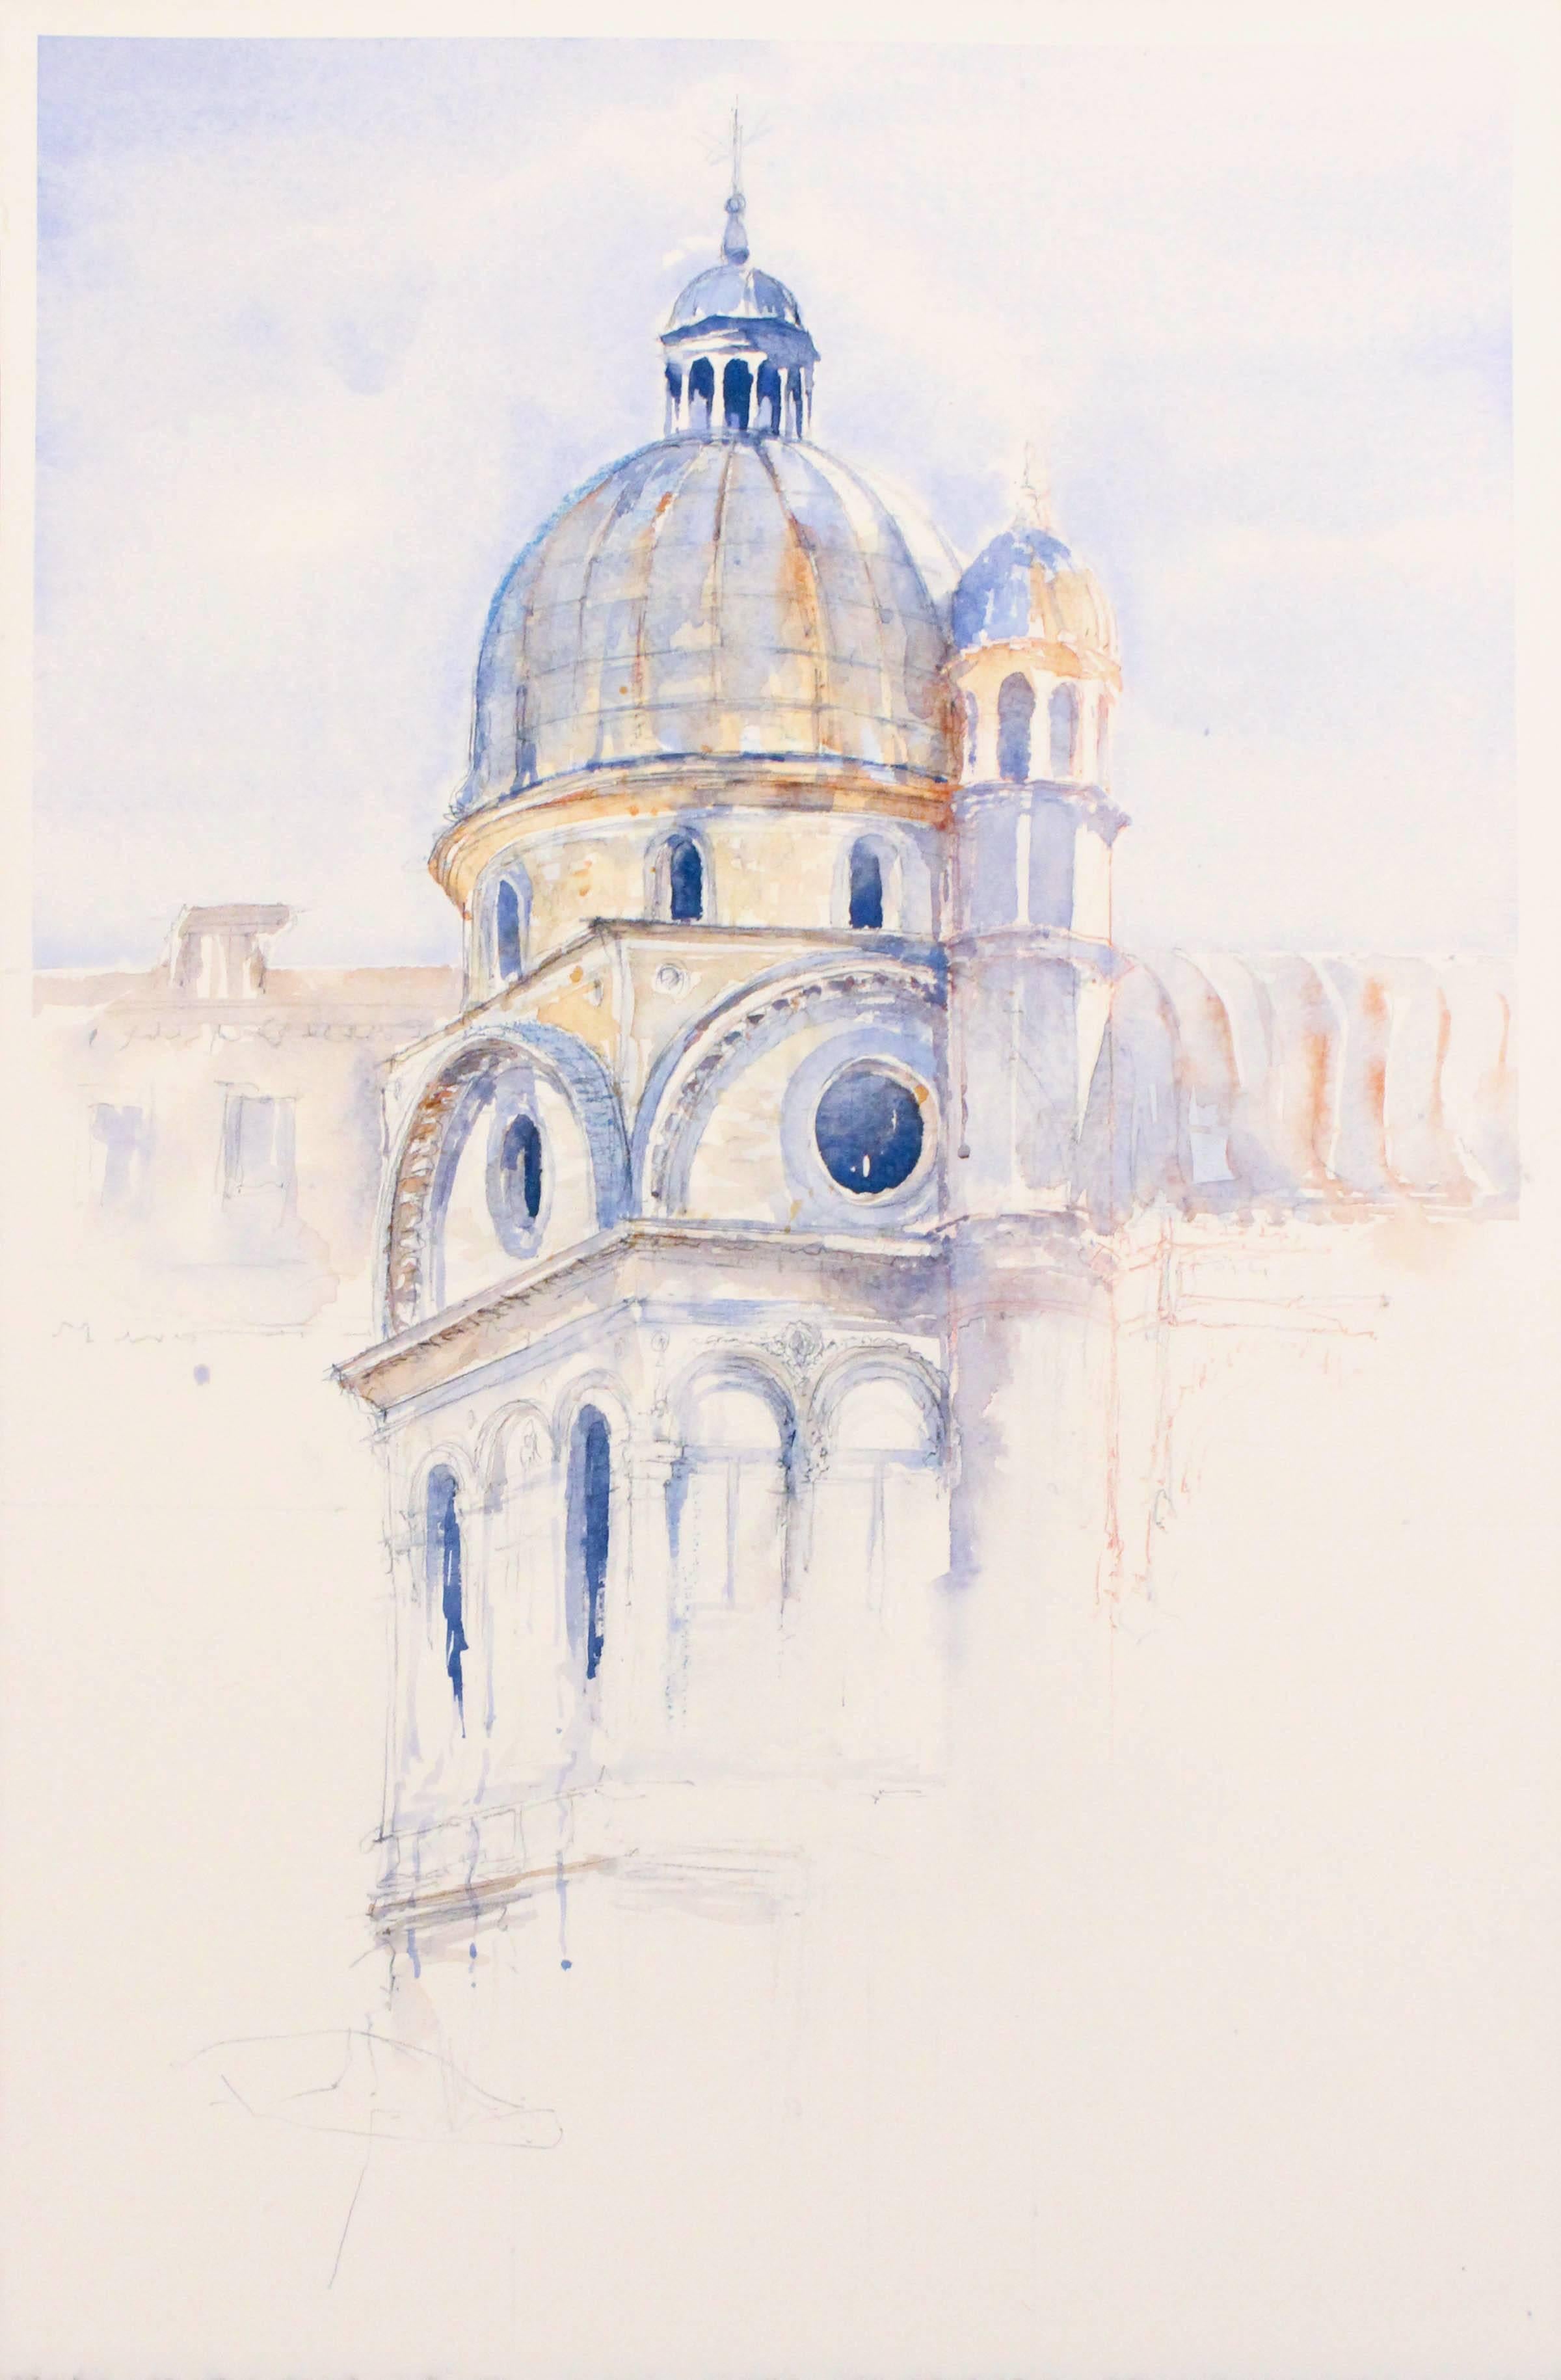 Mclean Jenkins Landscape Art - "Duomo" - Venice - Architectural Watercolor Painting - Turner